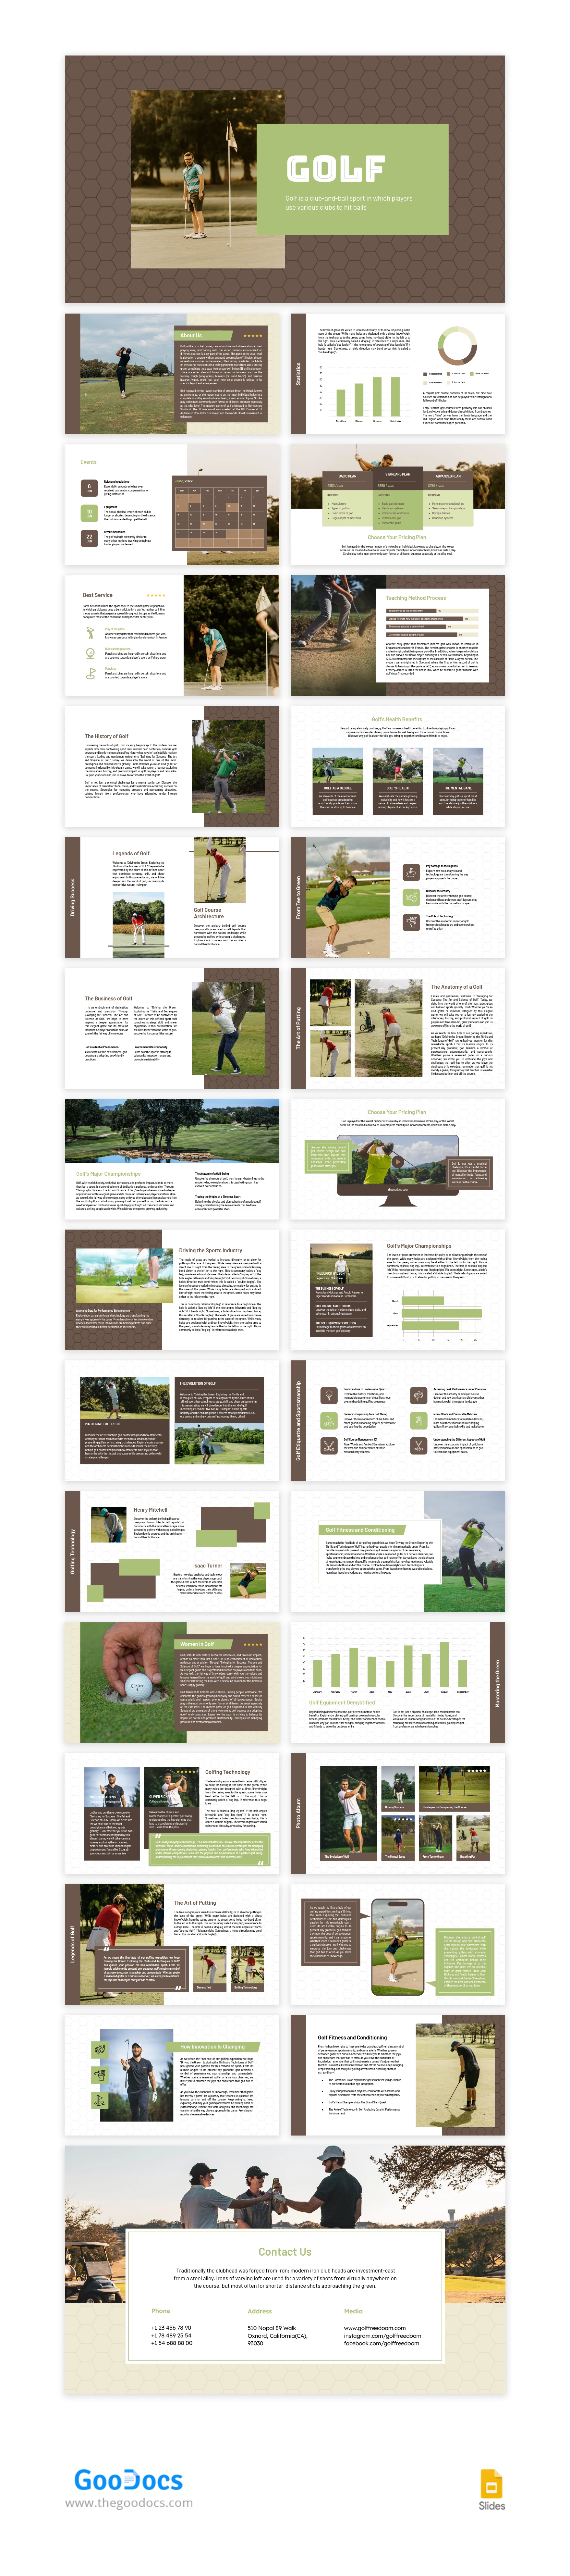 Schöner brauner Golfsport - free Google Docs Template - 10067059